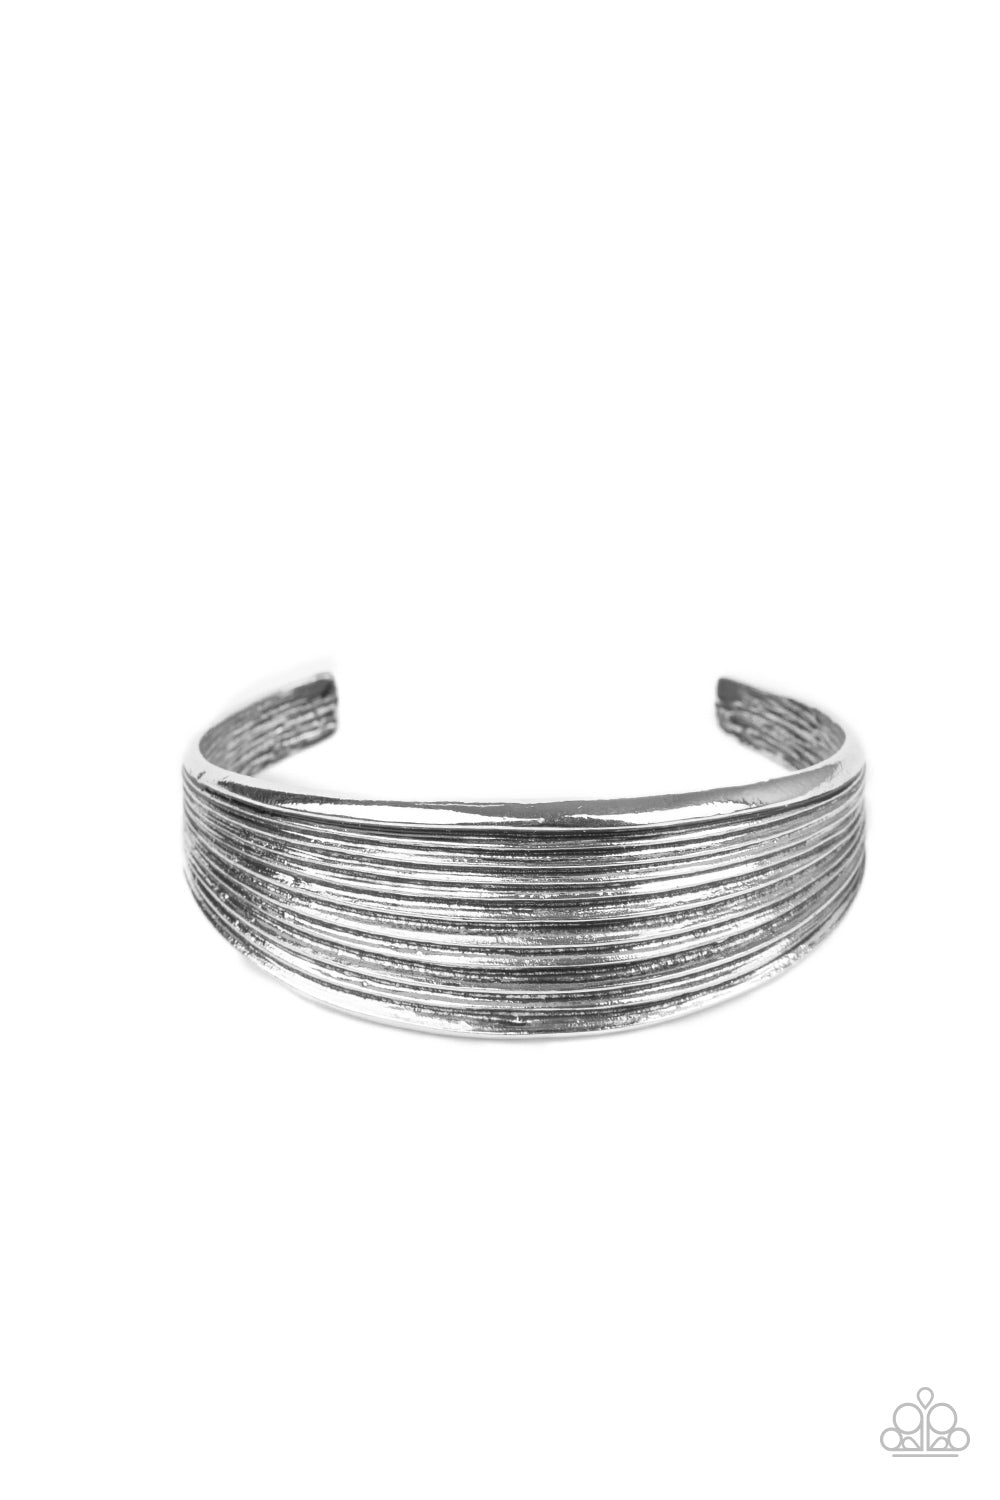 &lt;P&gt;Featuring beveled linear texture, a thick silver cuff delicately curls around the wrist for a dash of rustic refinement.
 &lt;/P&gt;

&lt;P&gt;&lt;I&gt; Sold as one individual bracelet.&lt;/I&gt;&lt;/p&gt;


&lt;img src=\&quot;https://d9b54x484lq62.cloudfront.net/paparazzi/shopping/images/517_tag150x115_1.png\&quot; alt=\&quot;New Kit\&quot; align=\&quot;middle\&quot; height=\&quot;50\&quot; width=\&quot;50\&quot;/&gt;